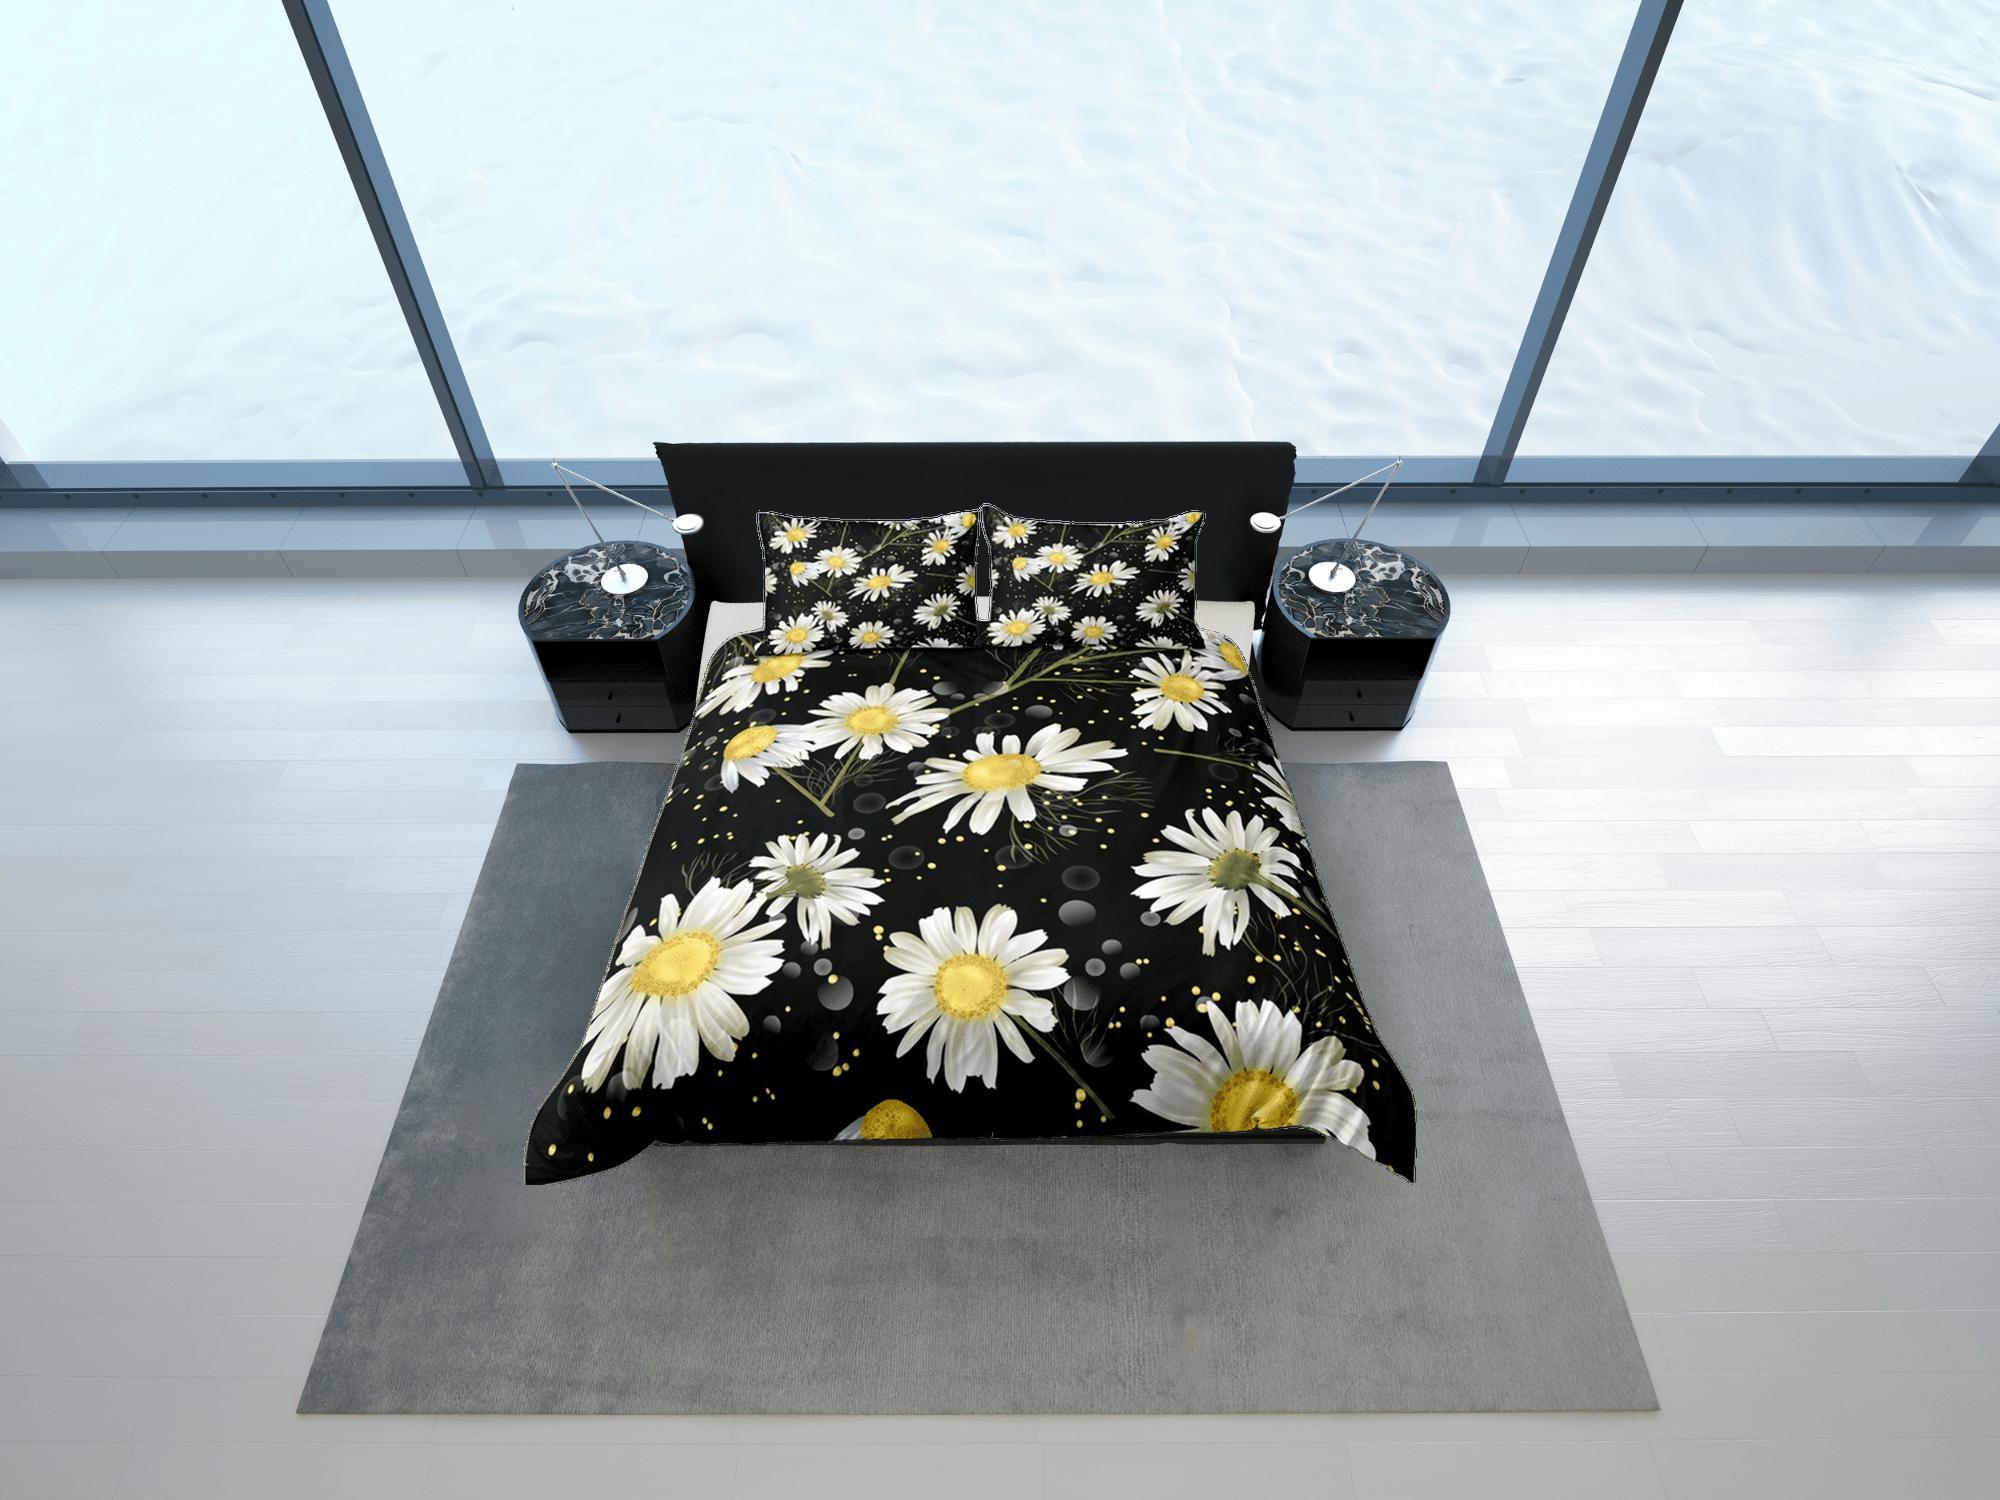 daintyduvet White Daisy Black Duvet Cover Set, Floral Print Bedspread Dorm Bedding Set